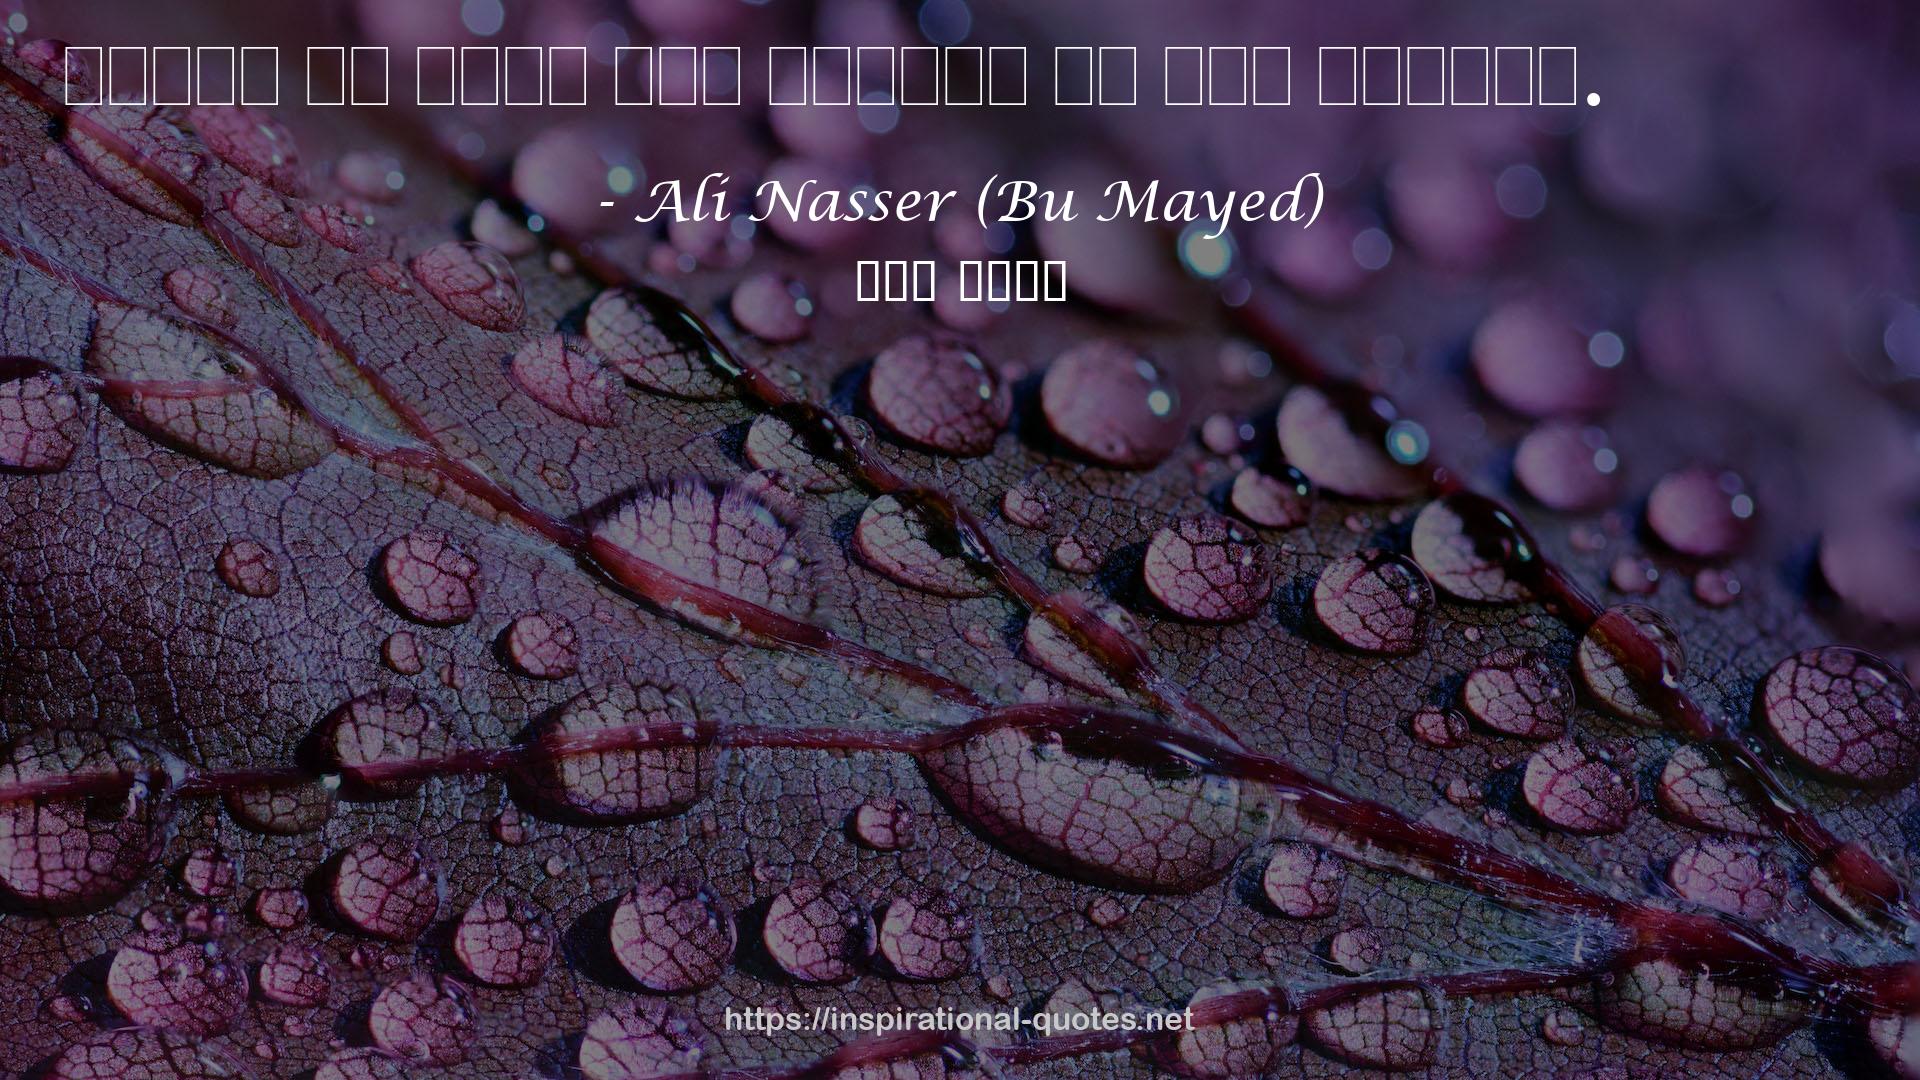 Ali Nasser (Bu Mayed) QUOTES